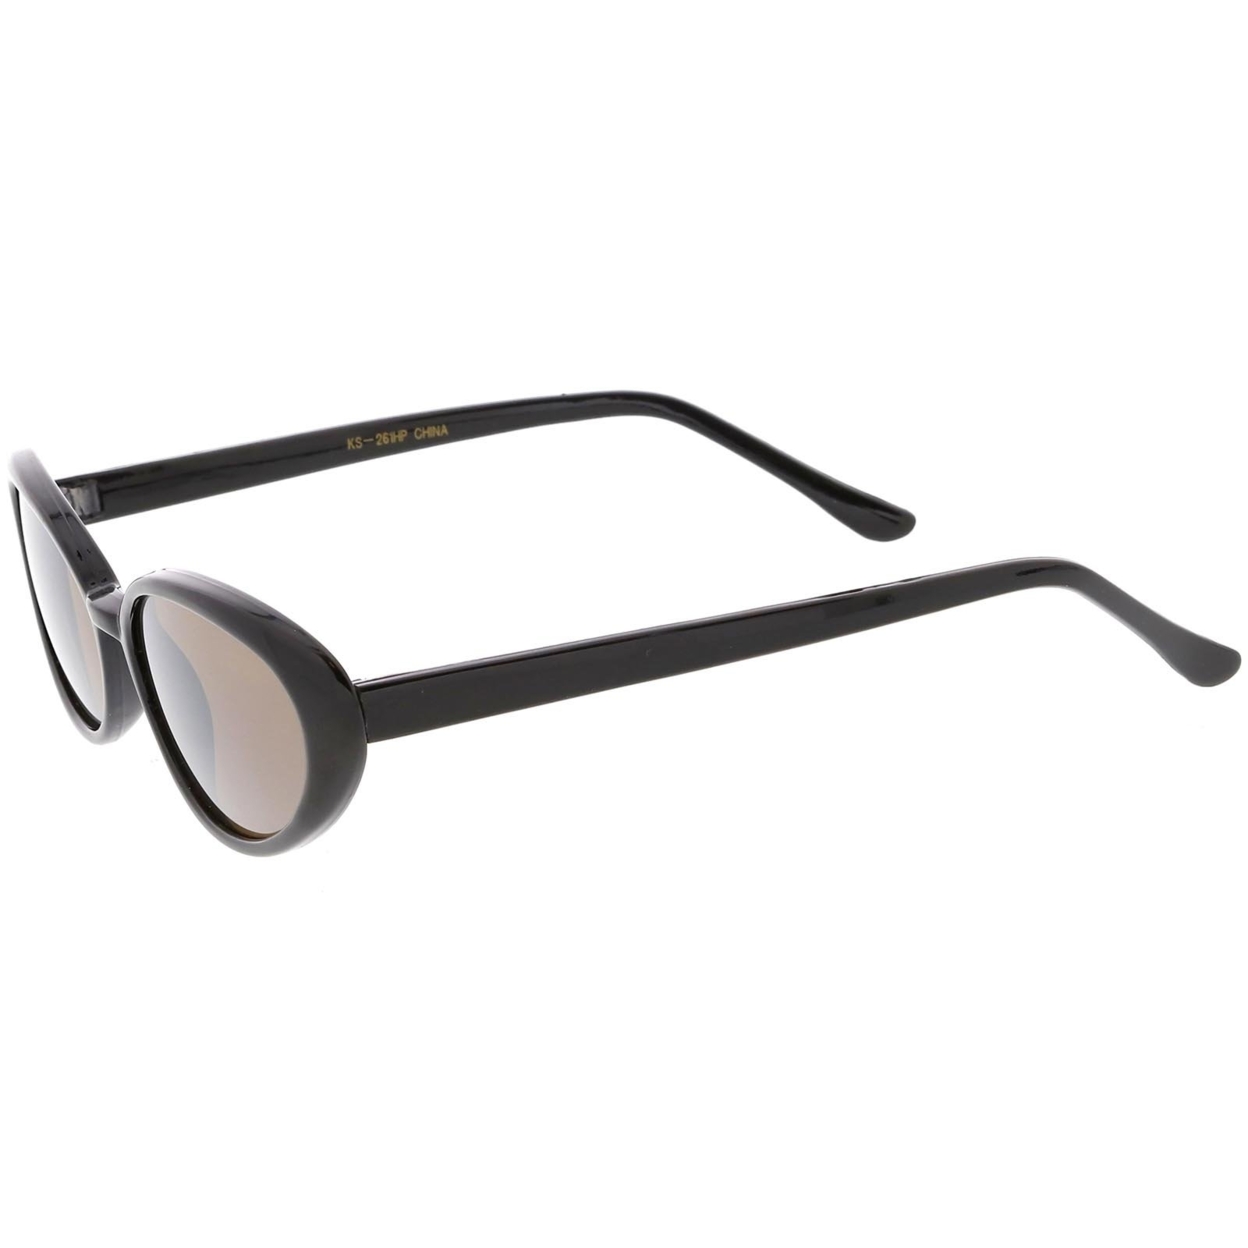 True Vintage Oval Sunglasses Colored Mirror Lens 51mm - Black / Smoke Mirror